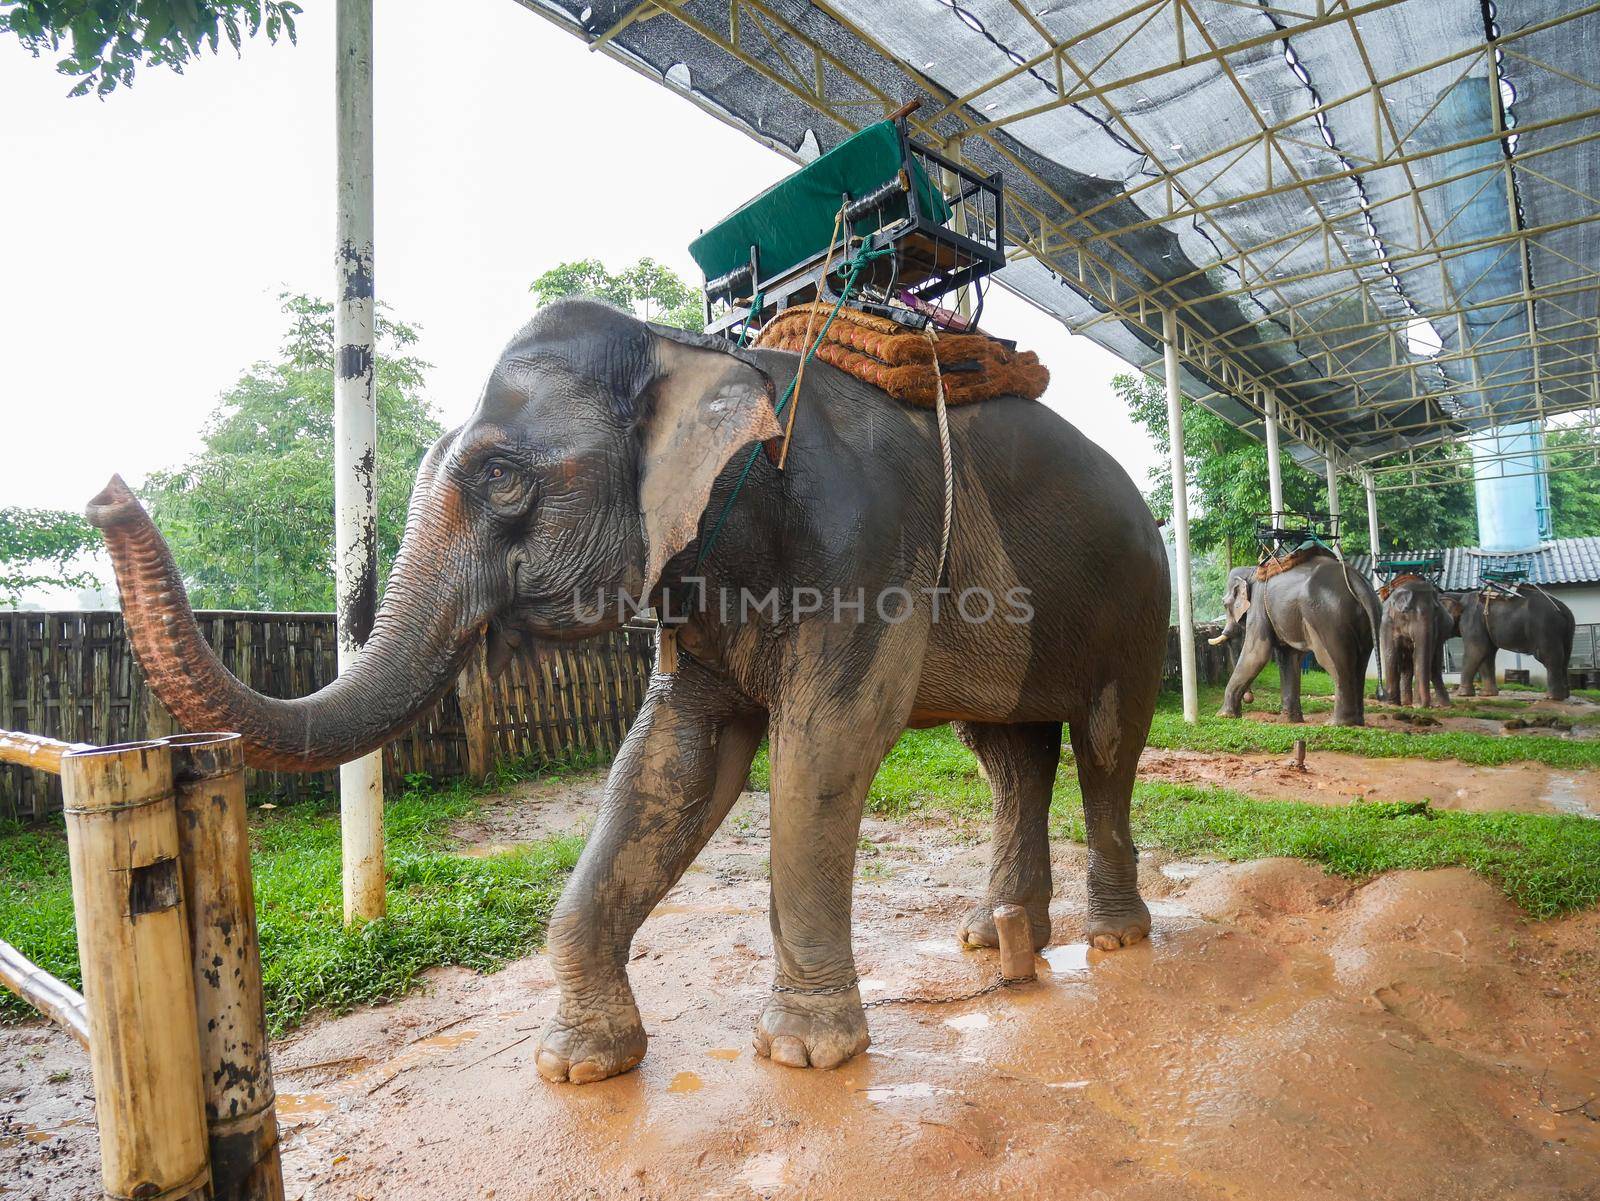 Elephants are in the zoo by Wmpix